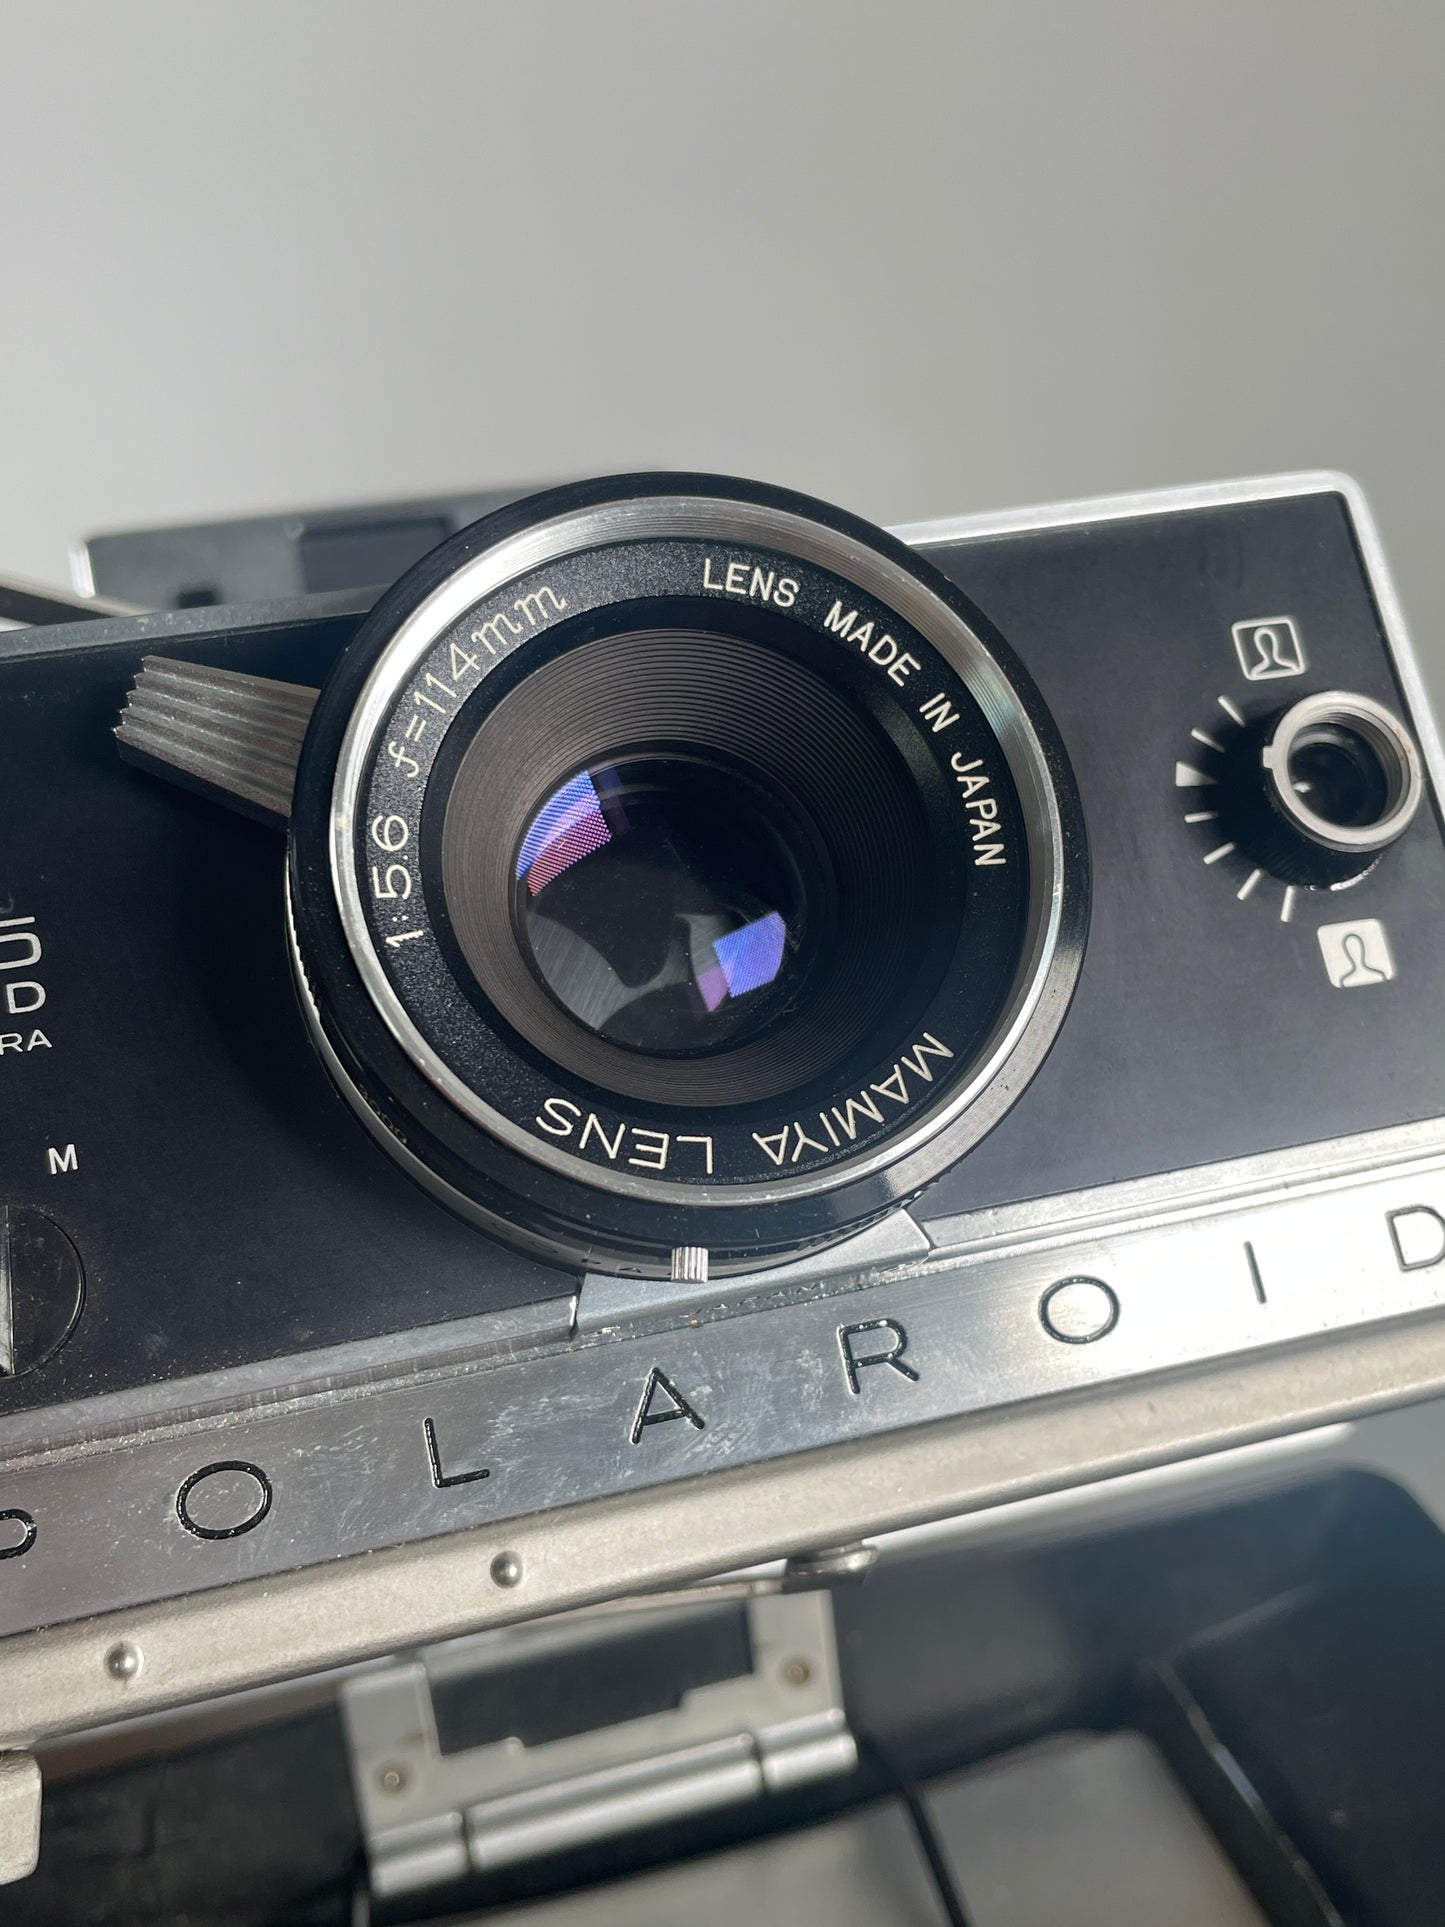 Polaroid Land Camera Model 185 w/Mamiya 114mm f5.6 Lens RARE